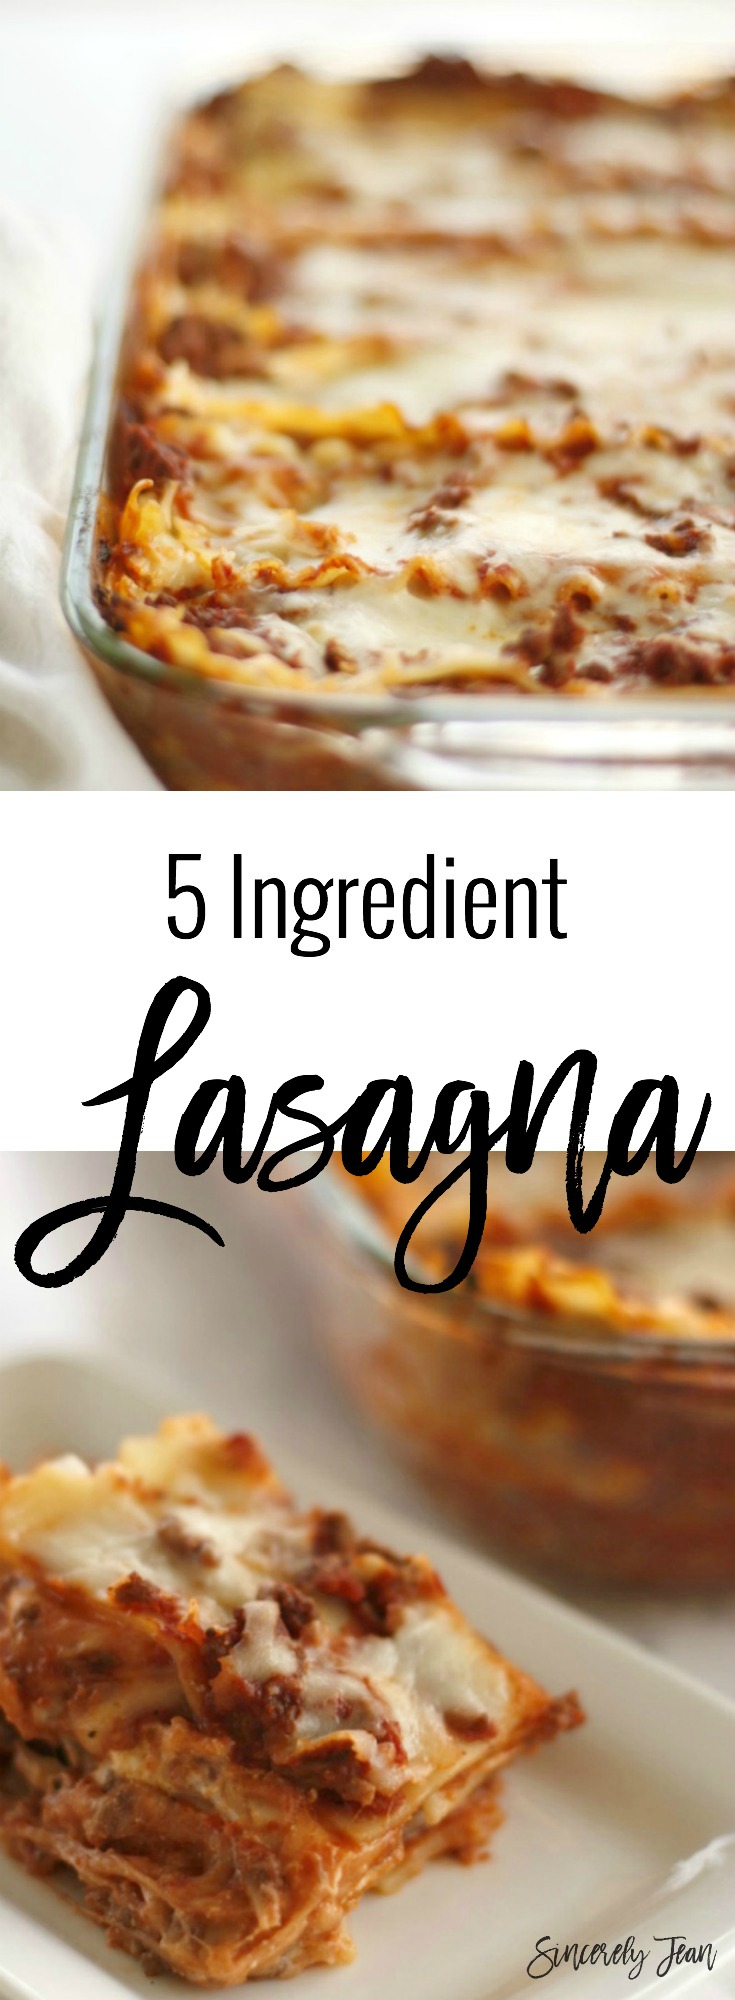 5 Ingredient Simple Lasagna - Page 2 of 2 - Sincerely Jean